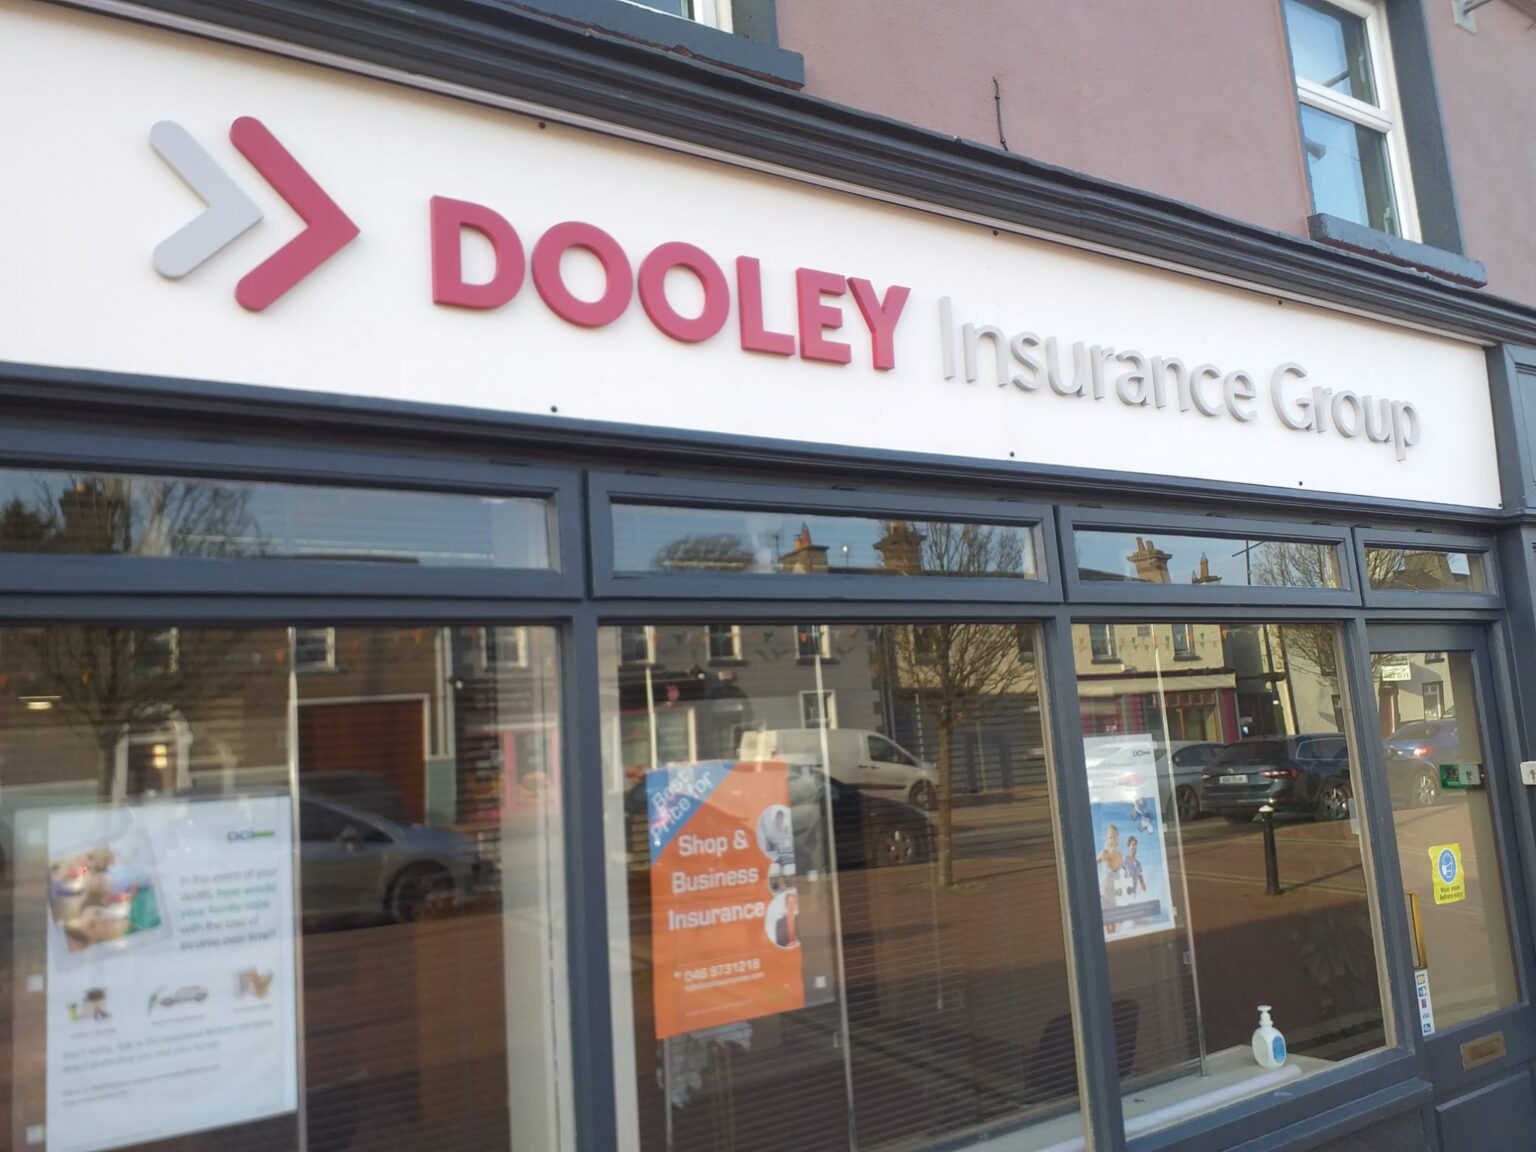 Dooley Insurance Group